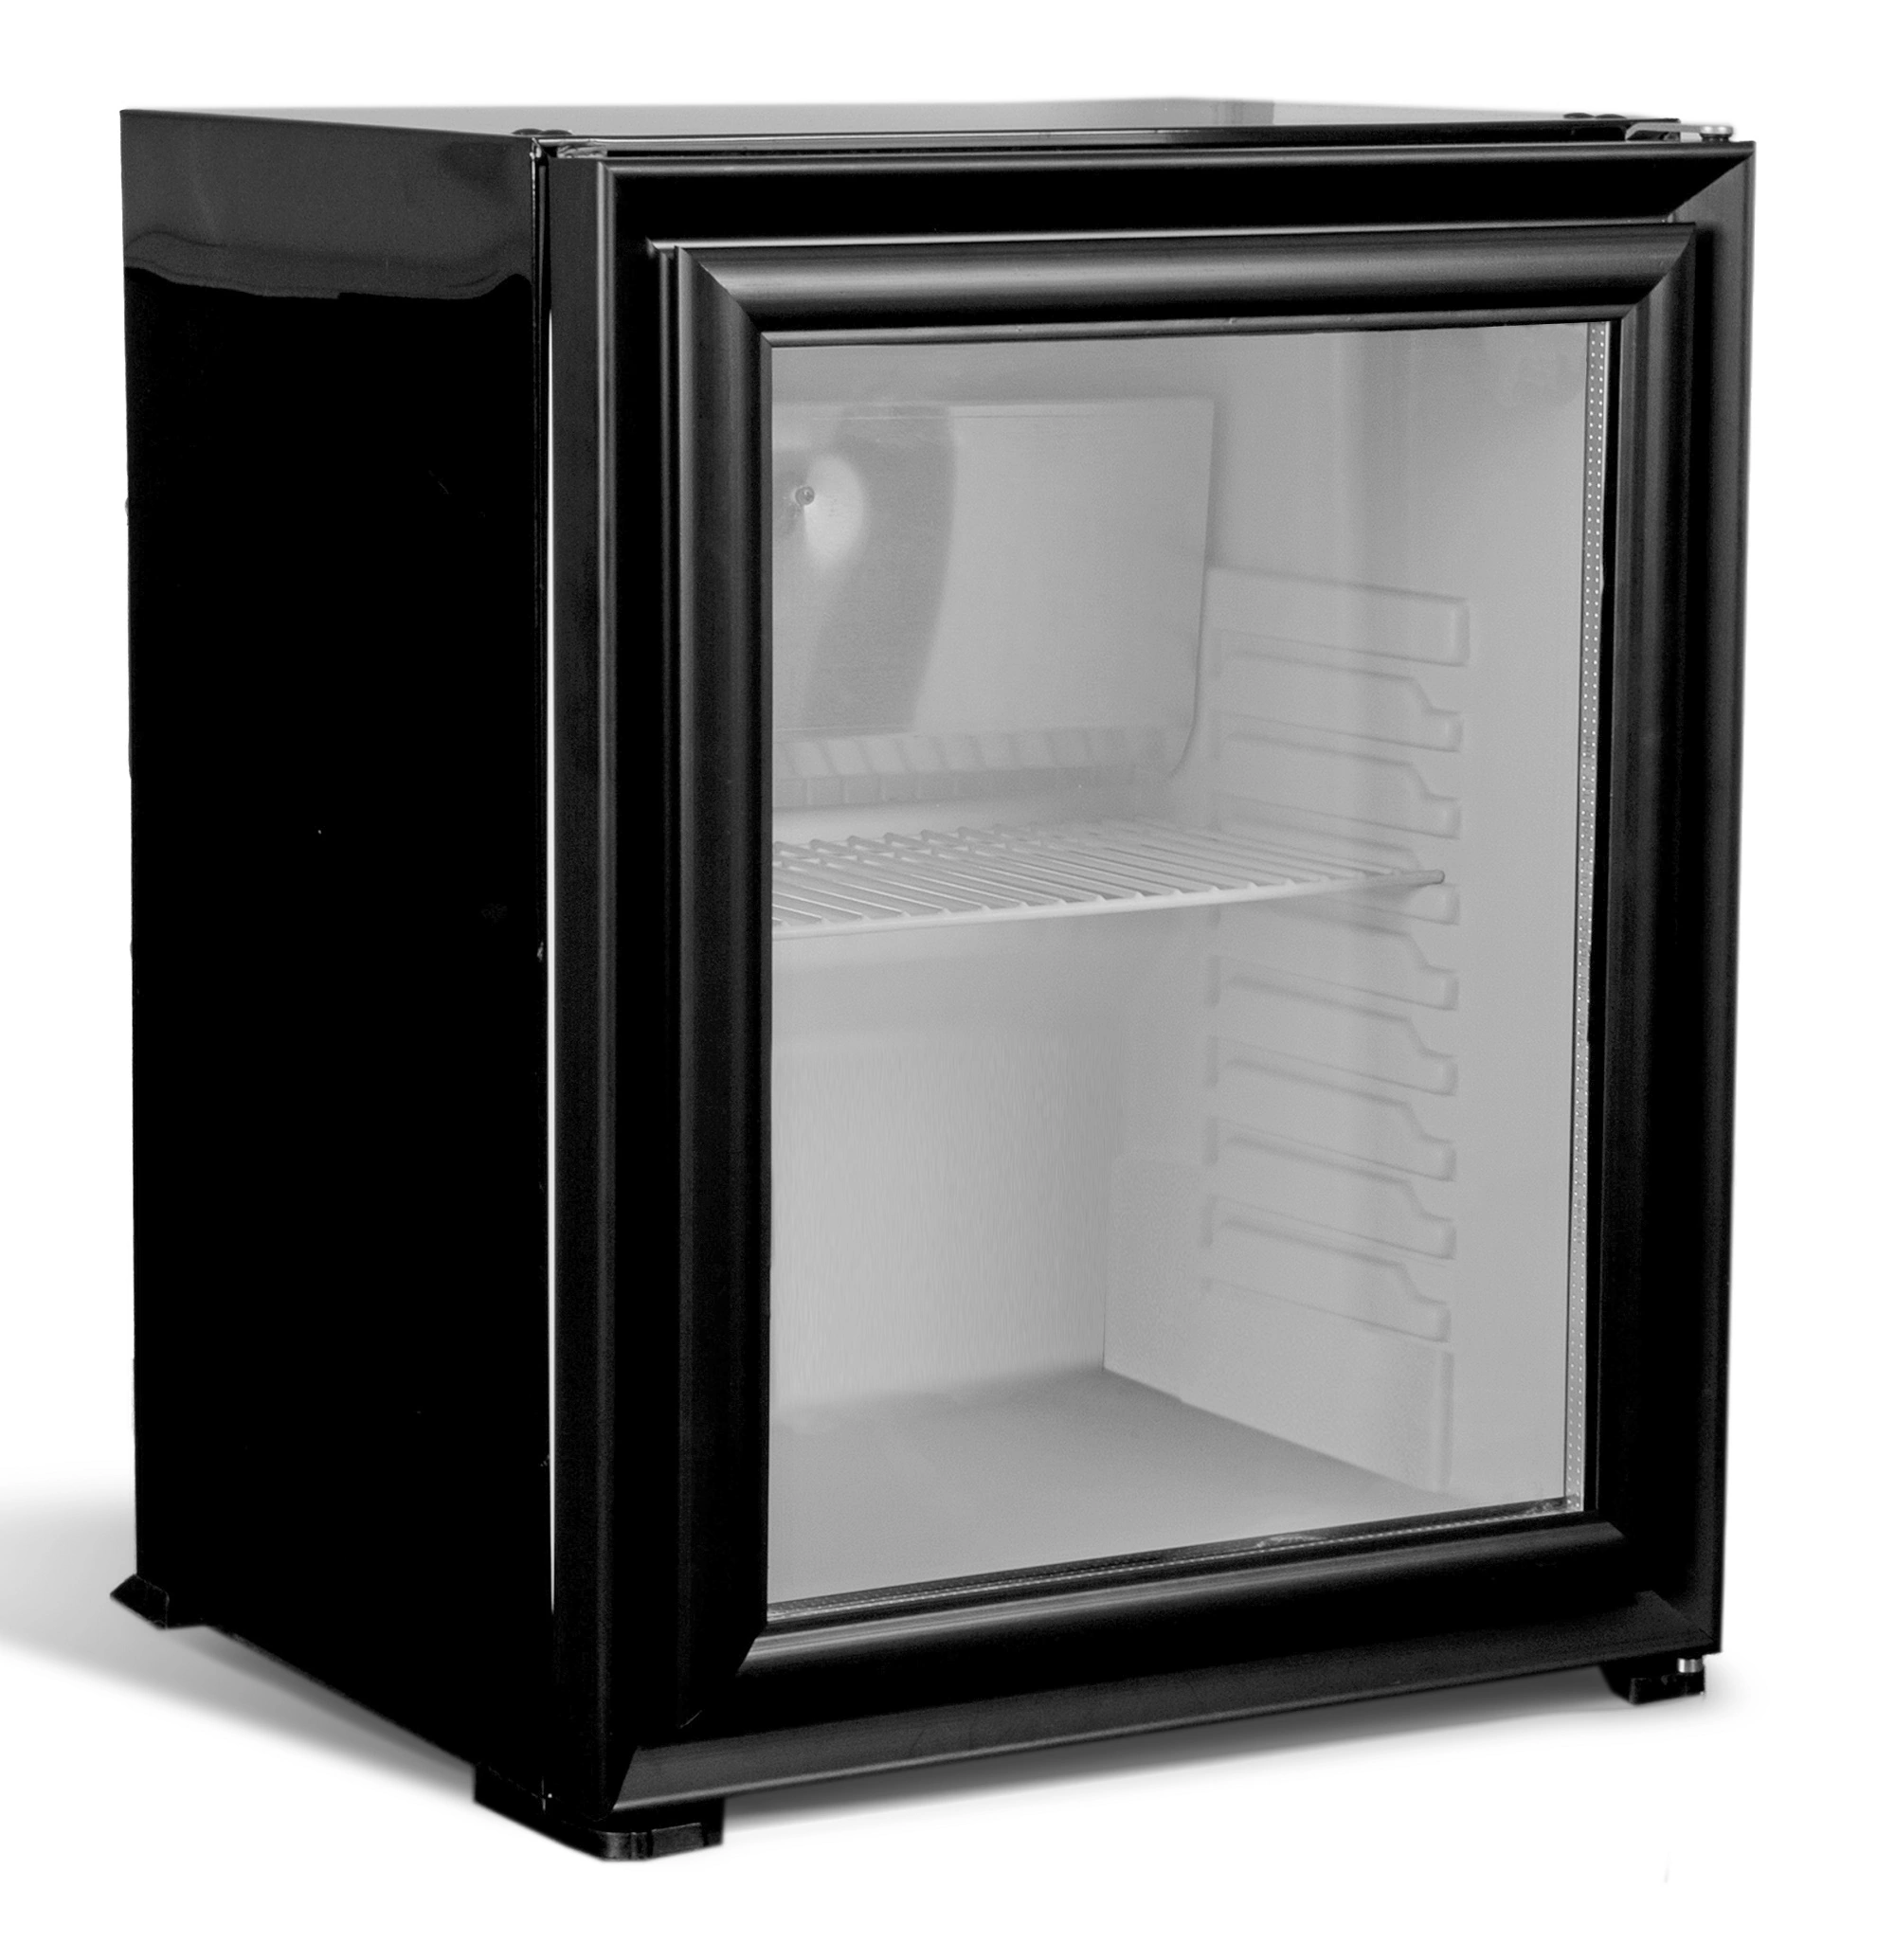 Minibar-Kühlschrank 40L - Combisteel